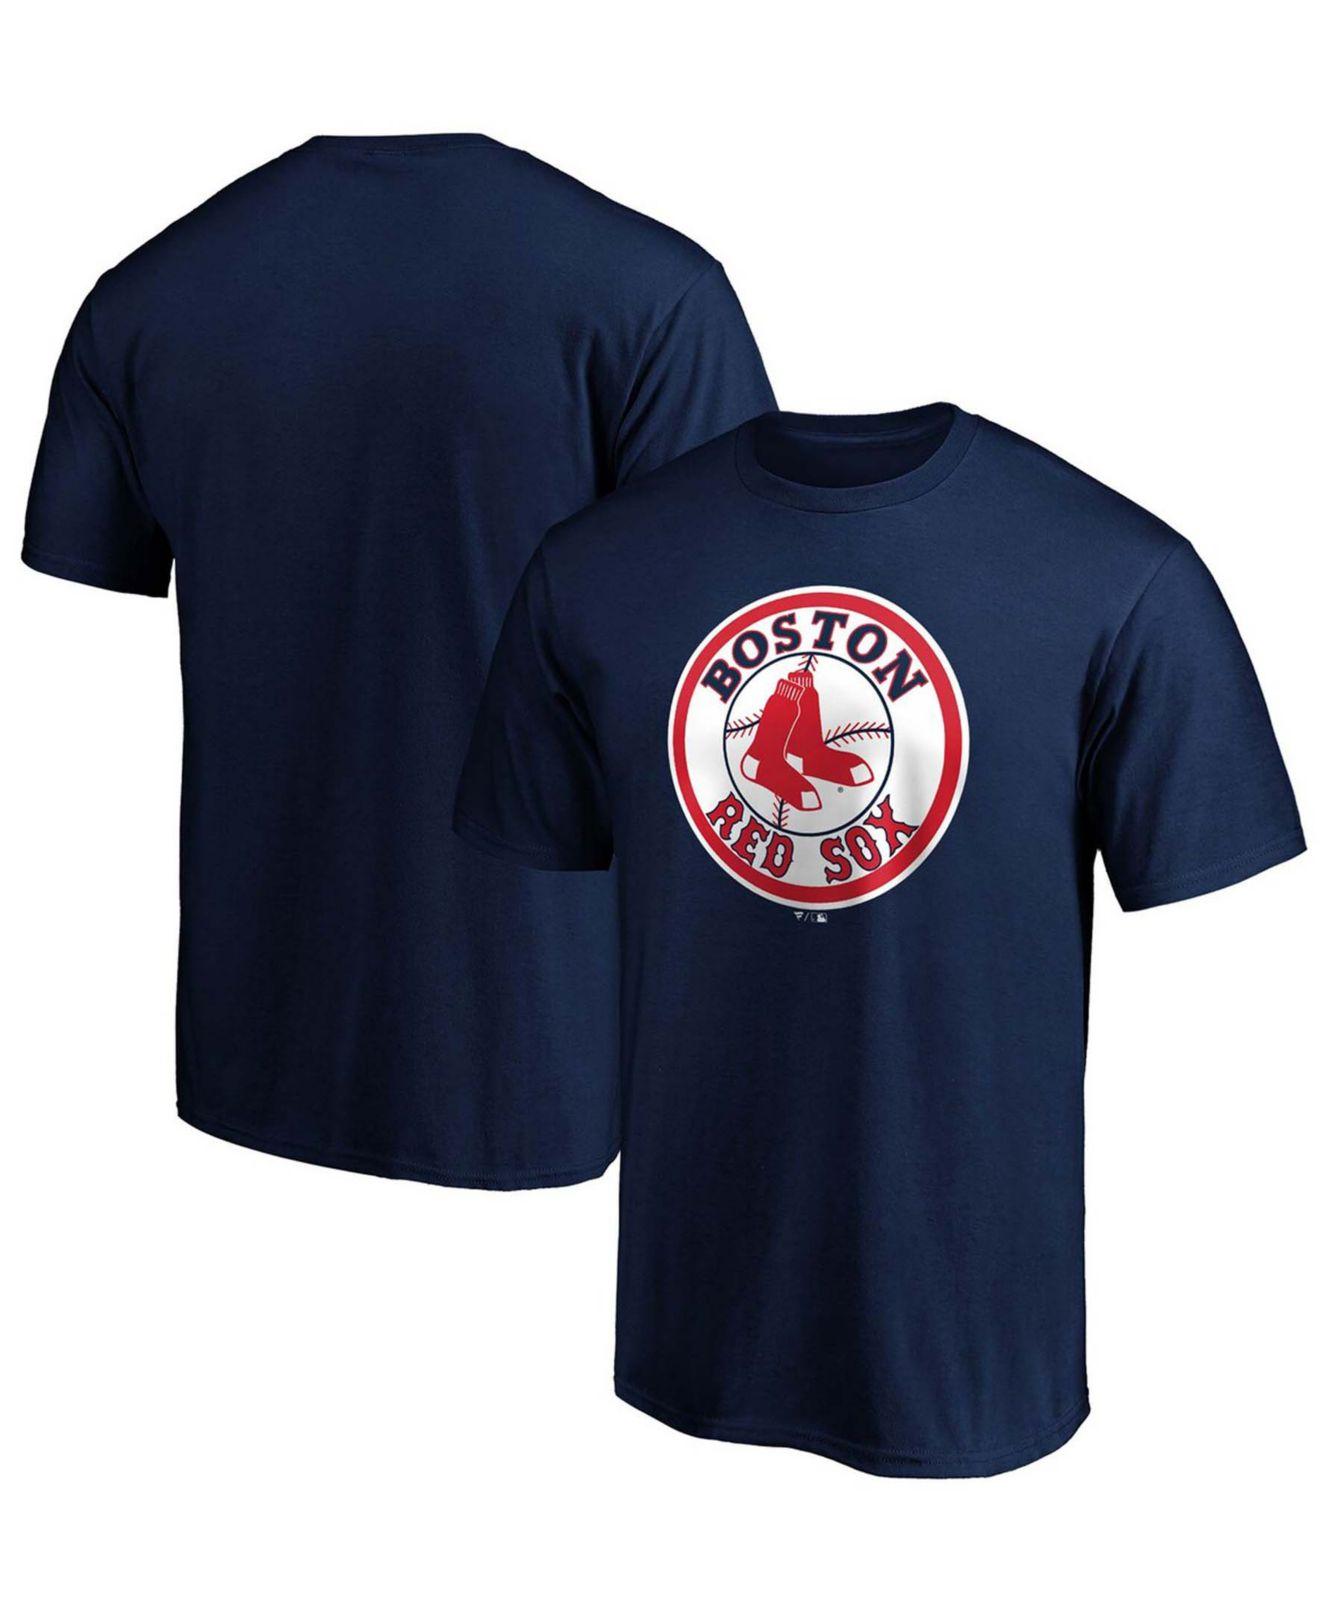 St. Louis Cardinals Fanatics Branded Cooperstown Collection Forbes Team  T-Shirt - Light Blue